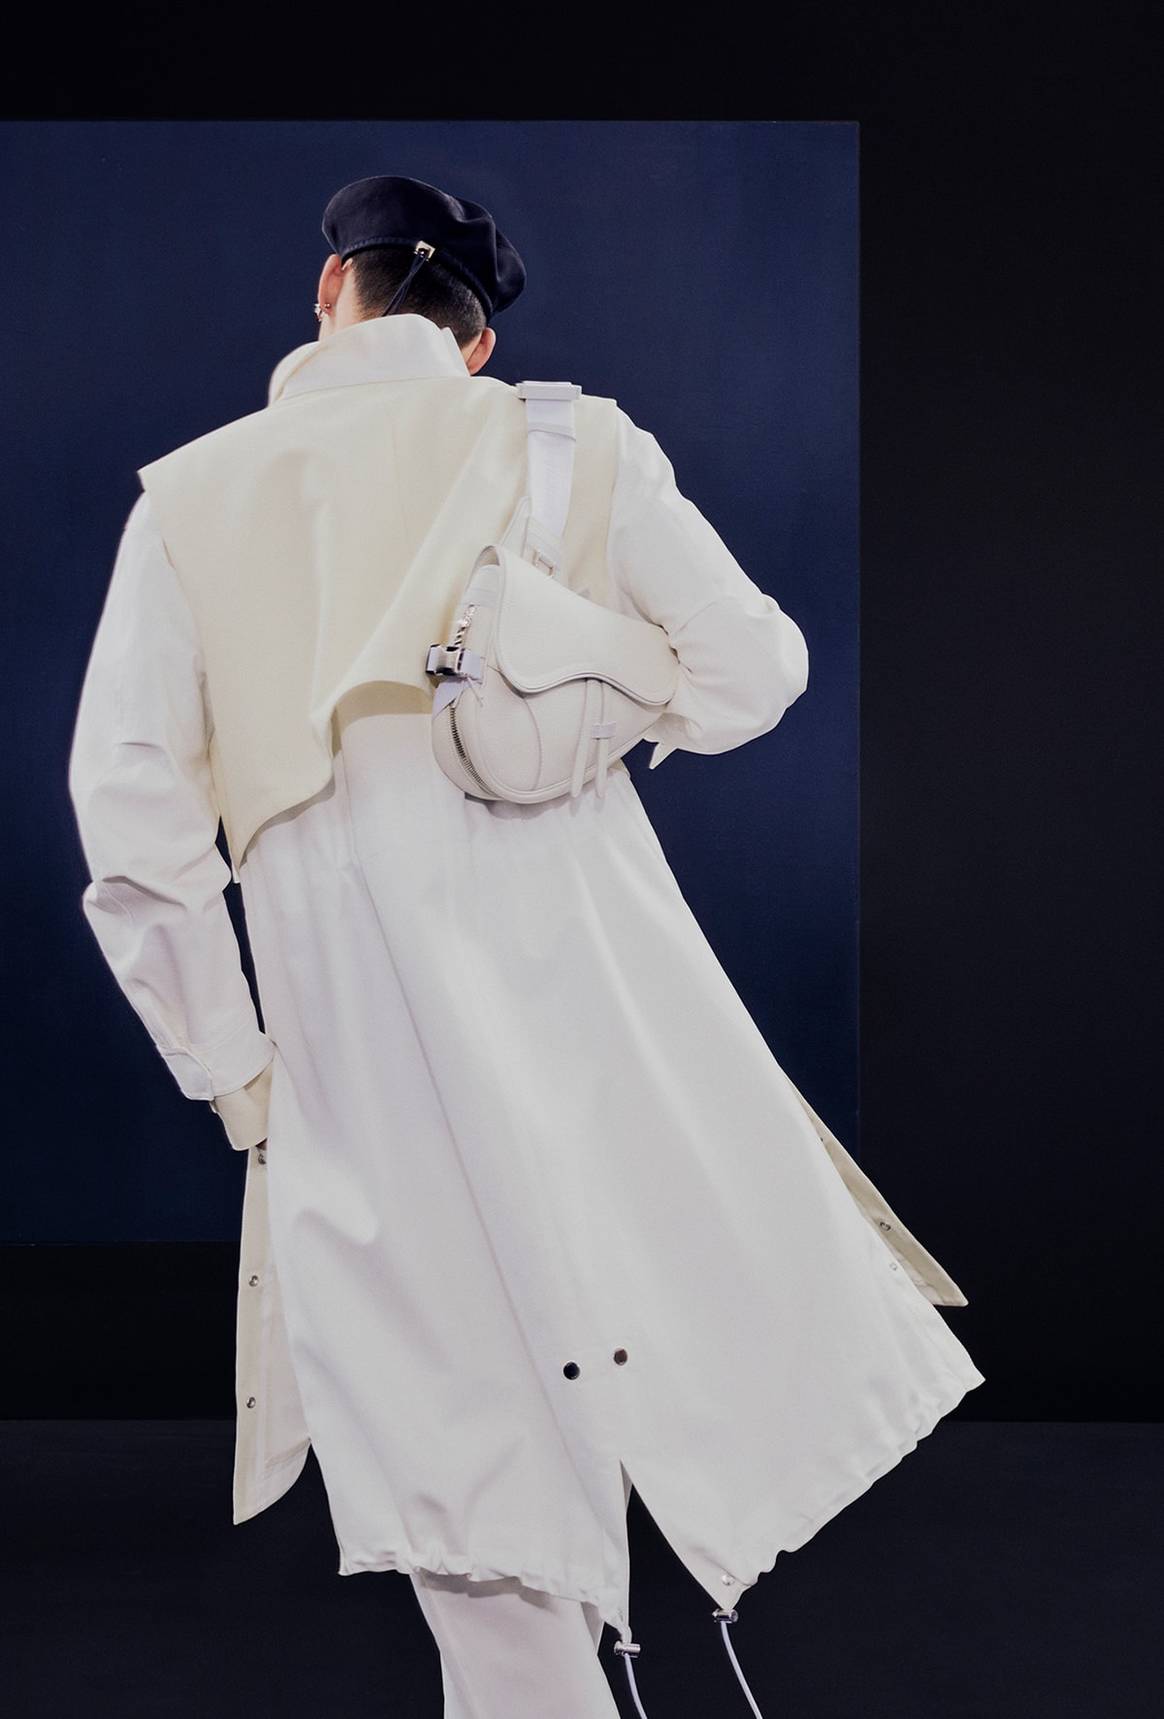 Dior lance une collection en collaboration avec Sacai